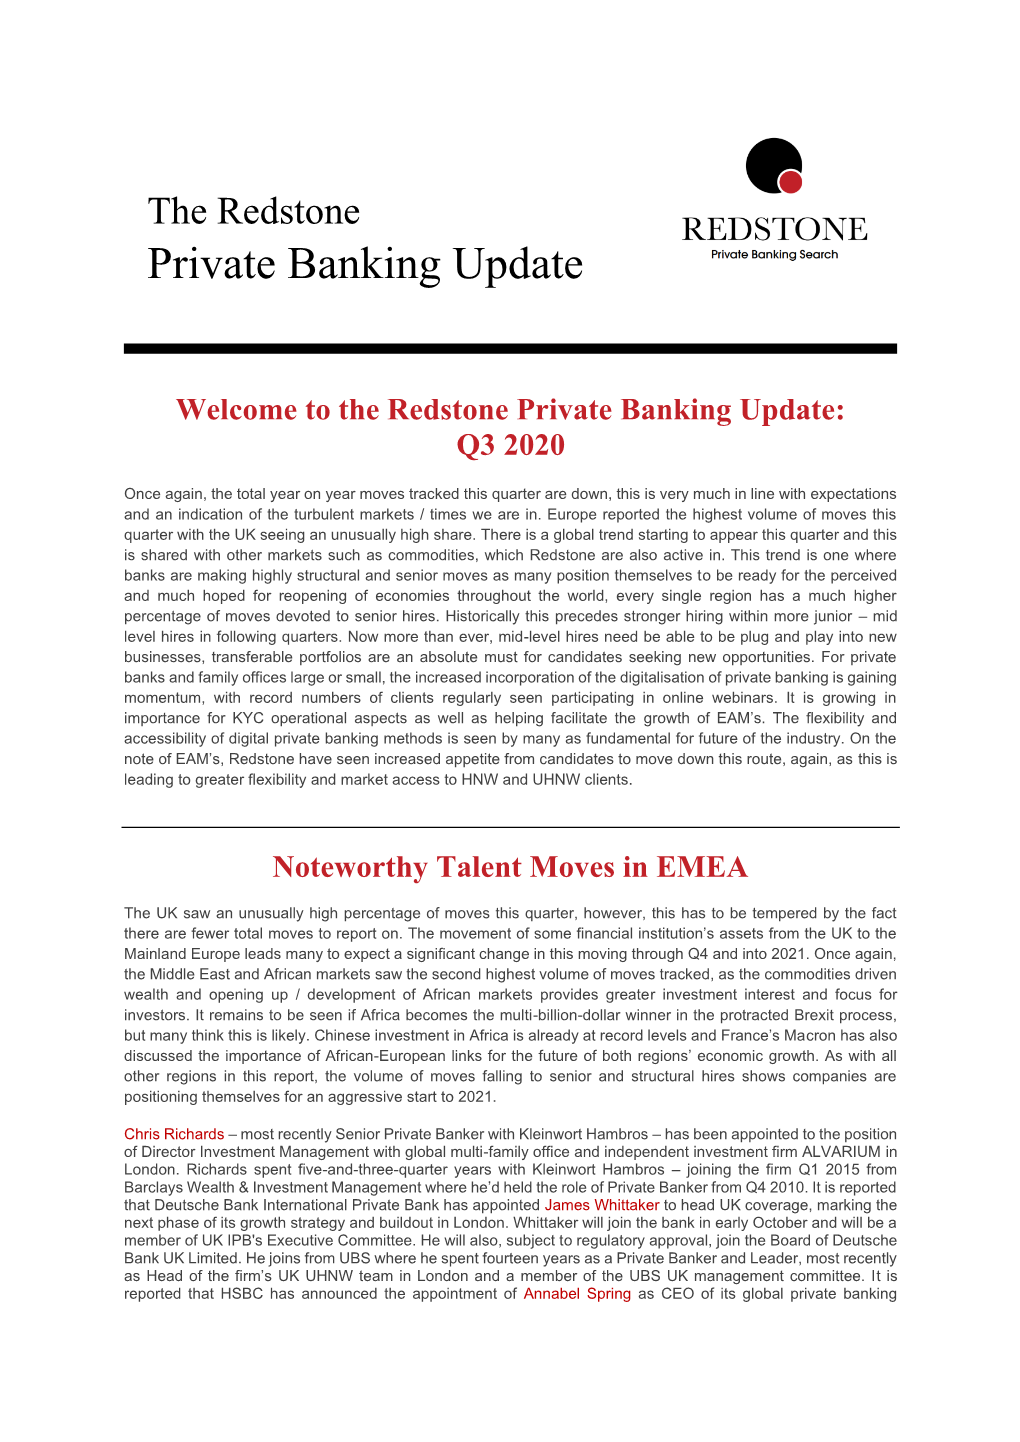 Redstone Private Banking Update Q3 2020